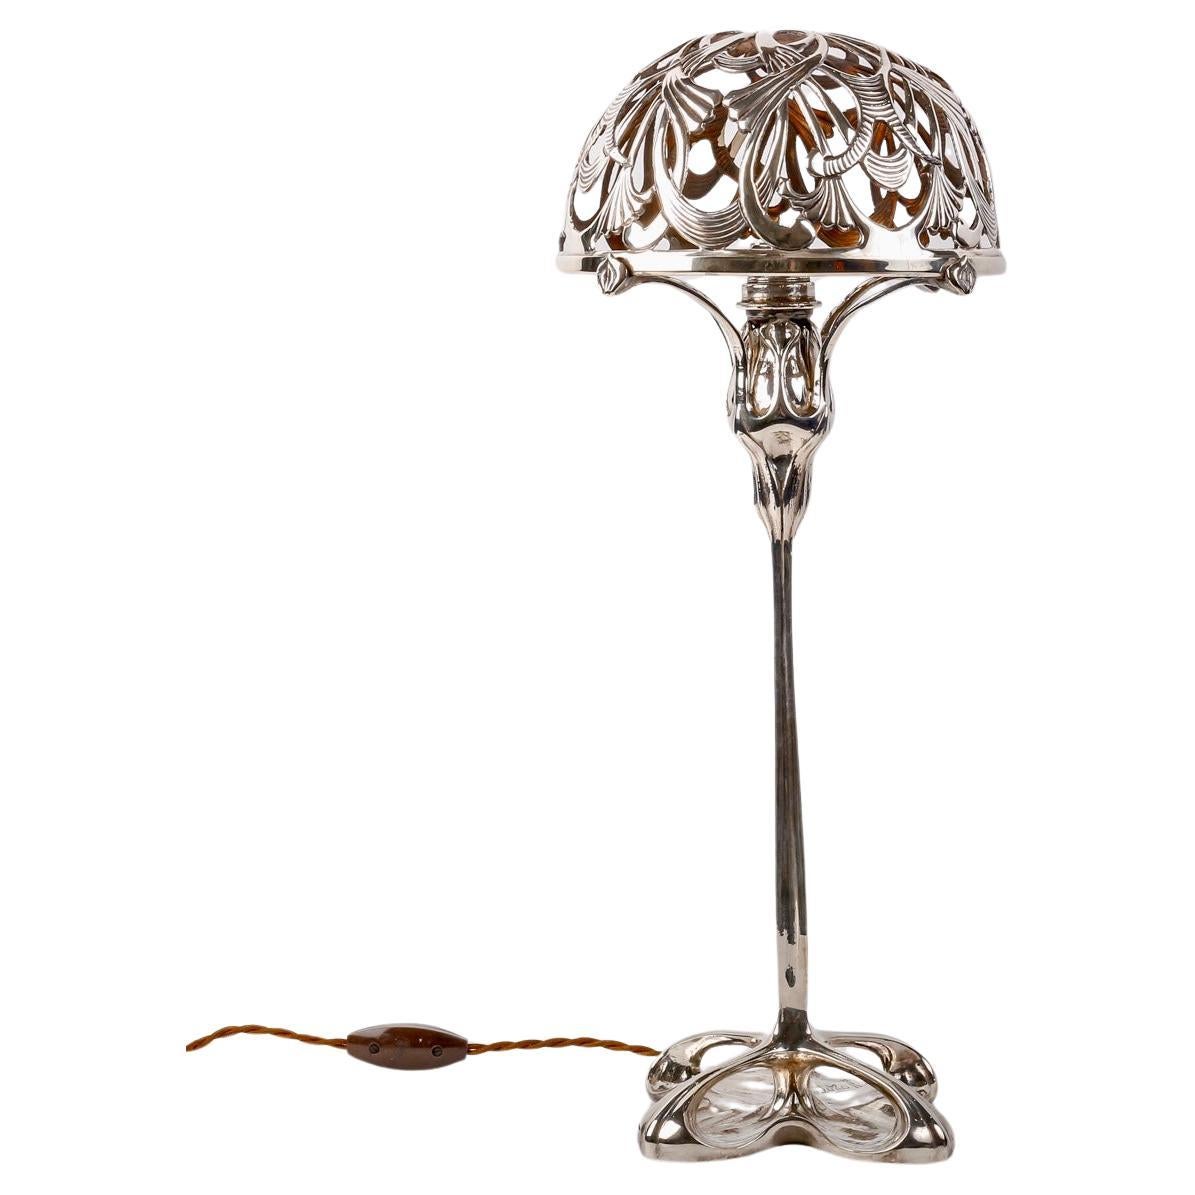 1904 Paul Follot - Lamp Foliage  Silvered Bronze  For La Maison Moderne